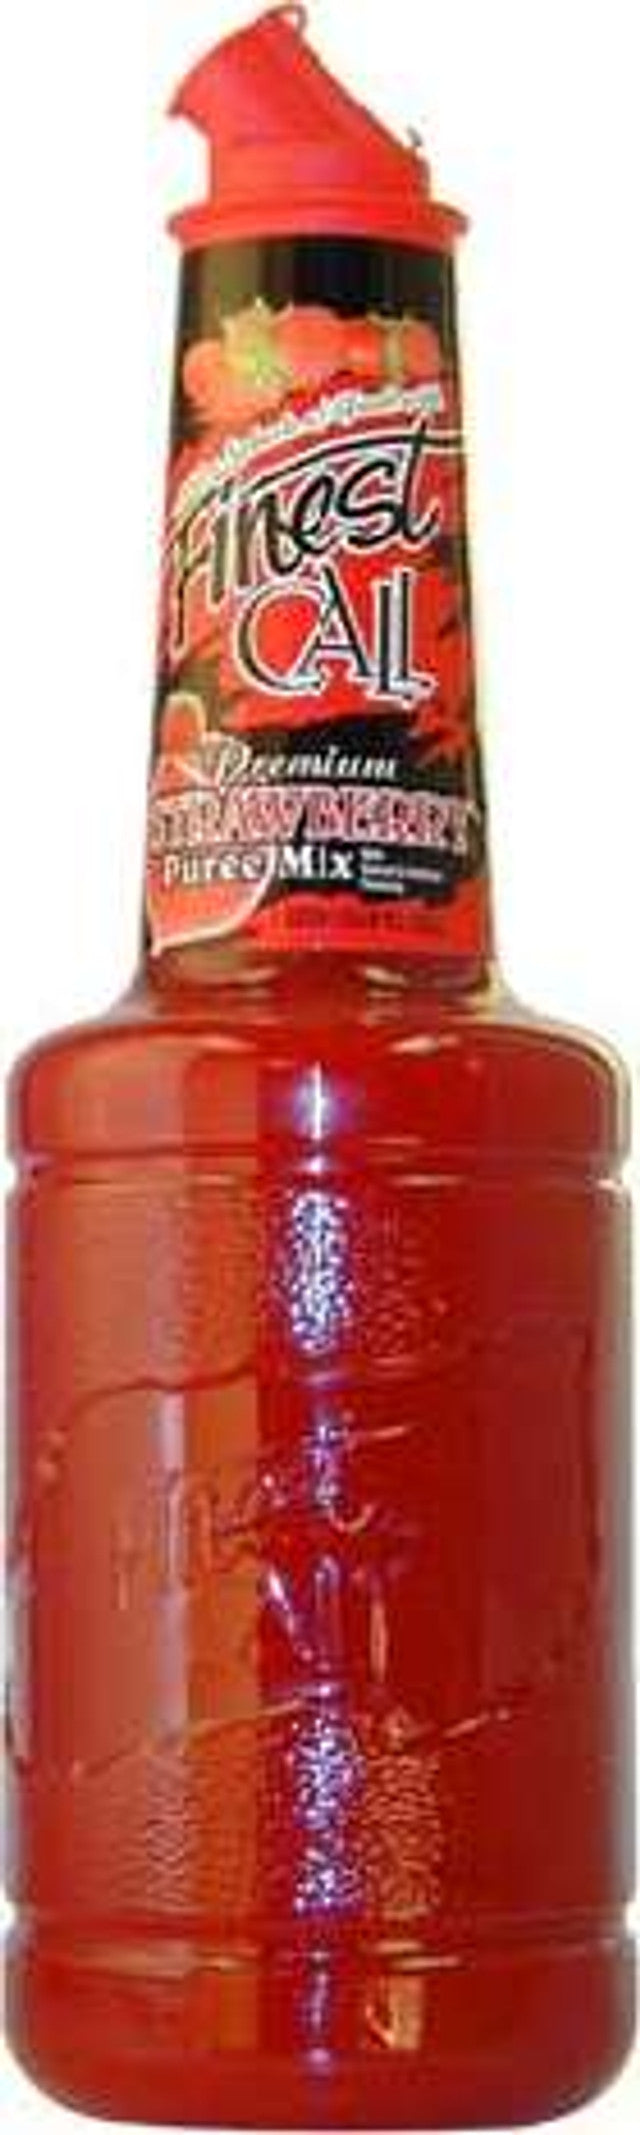 Finest Call Premium Strawberry Puree Mix 1.0L